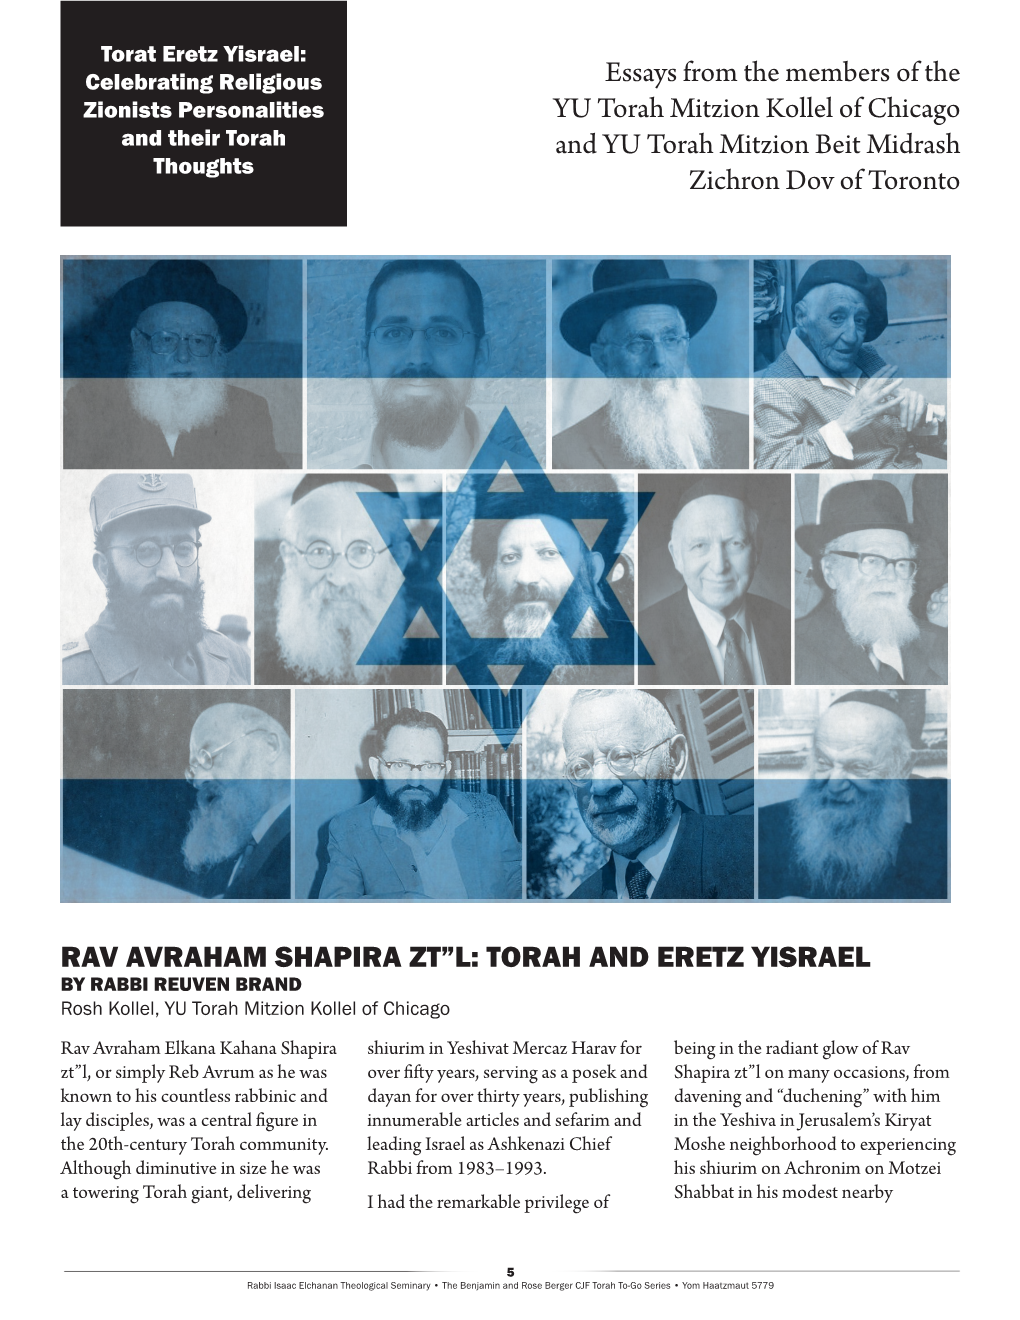 "Rav Avraham Shapira Zt"L: Torah and Eretz Yisrael"